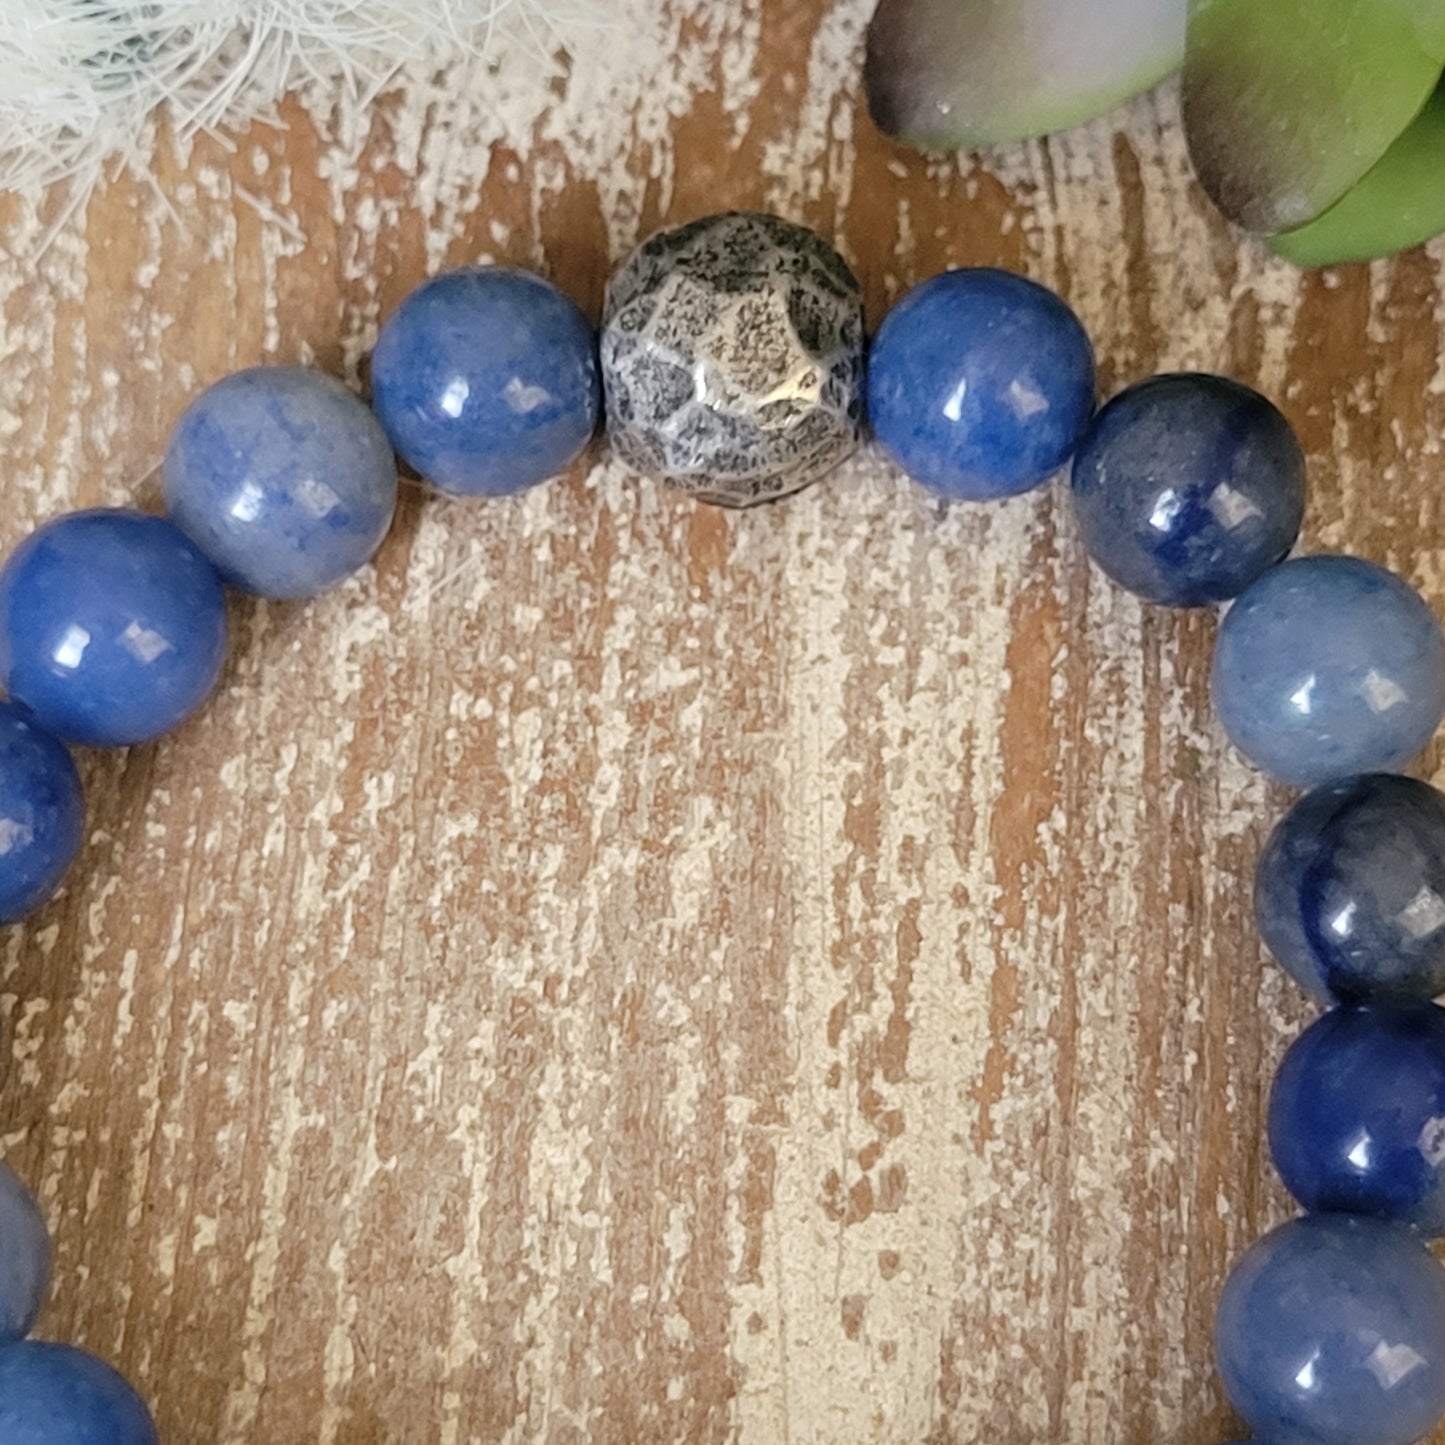 Sacred Heart Immaculate Cross Boho Chic bracelet, blue Aventurine beads